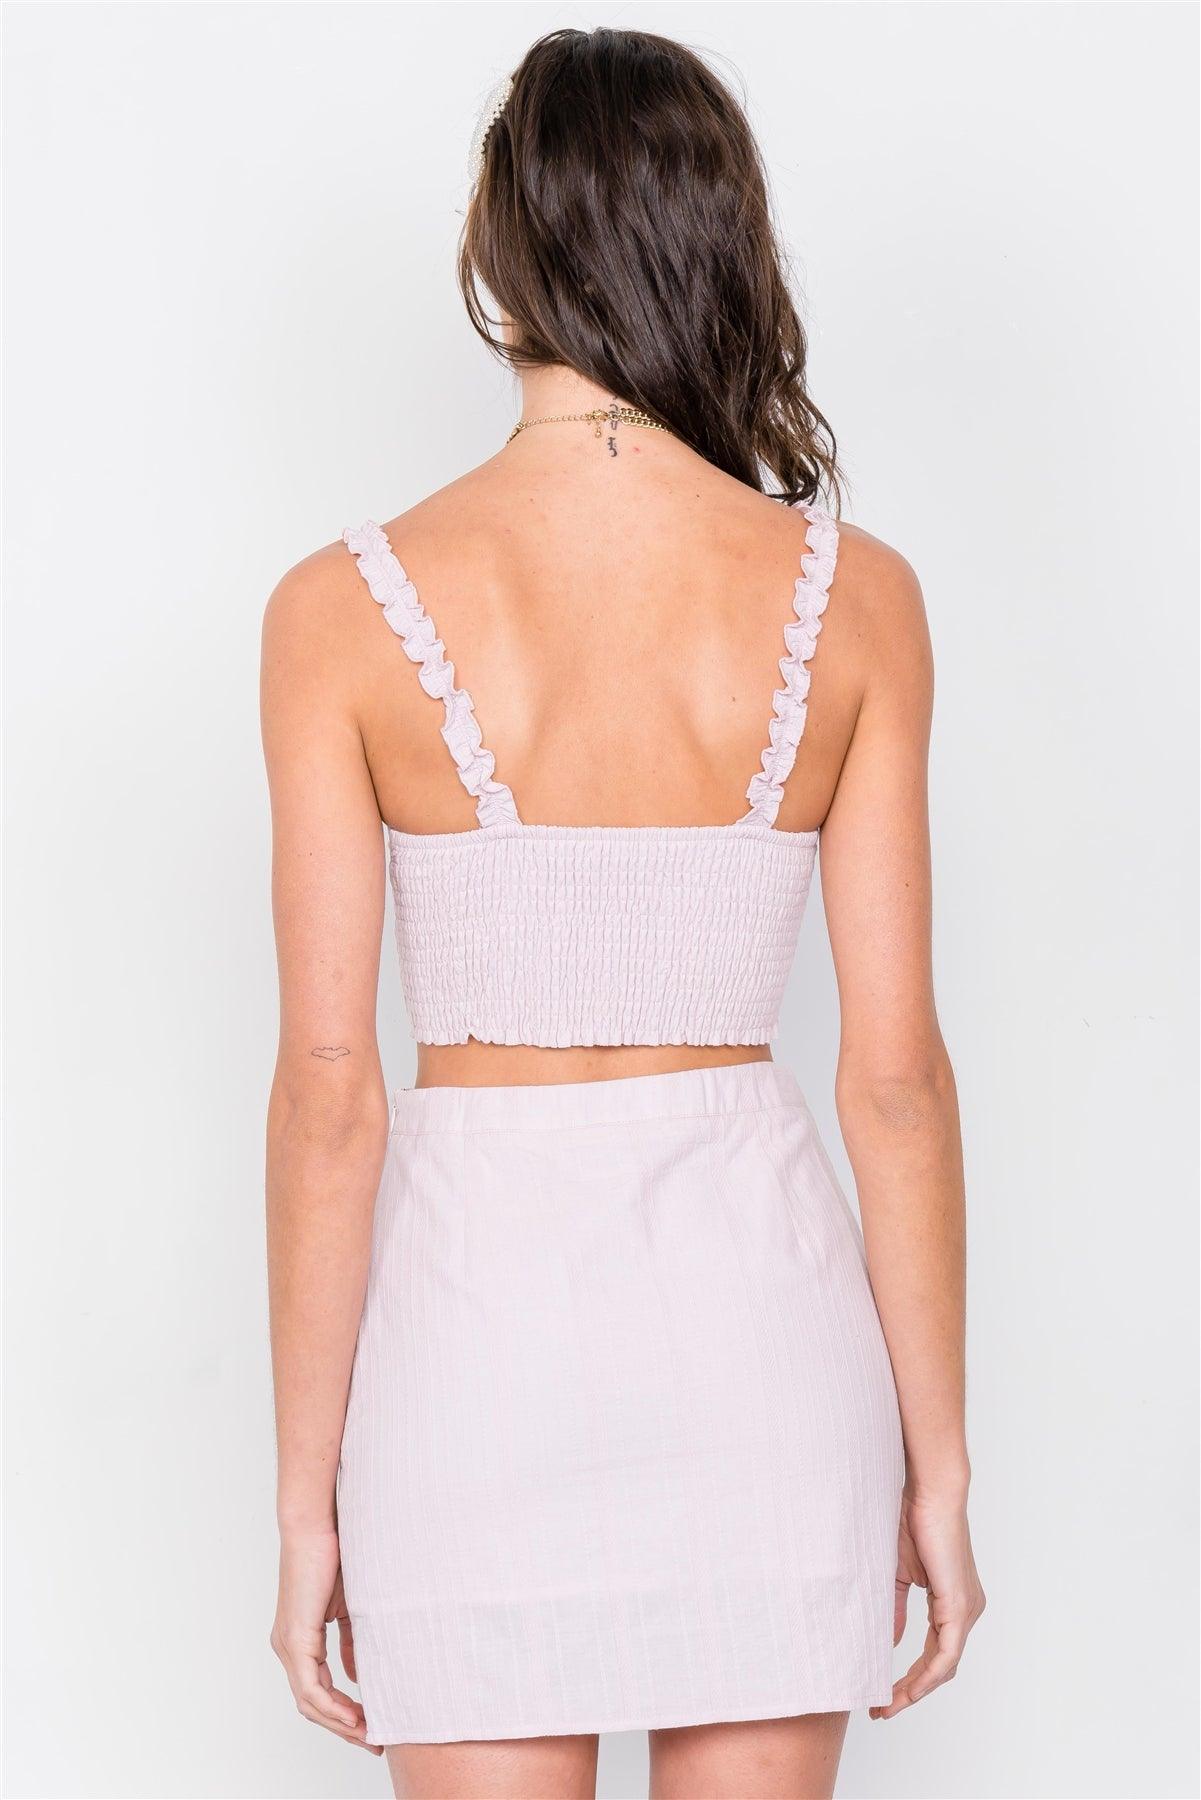 Lavender Pink Crop Front Knot & Mini Skirt Set /3-2-1